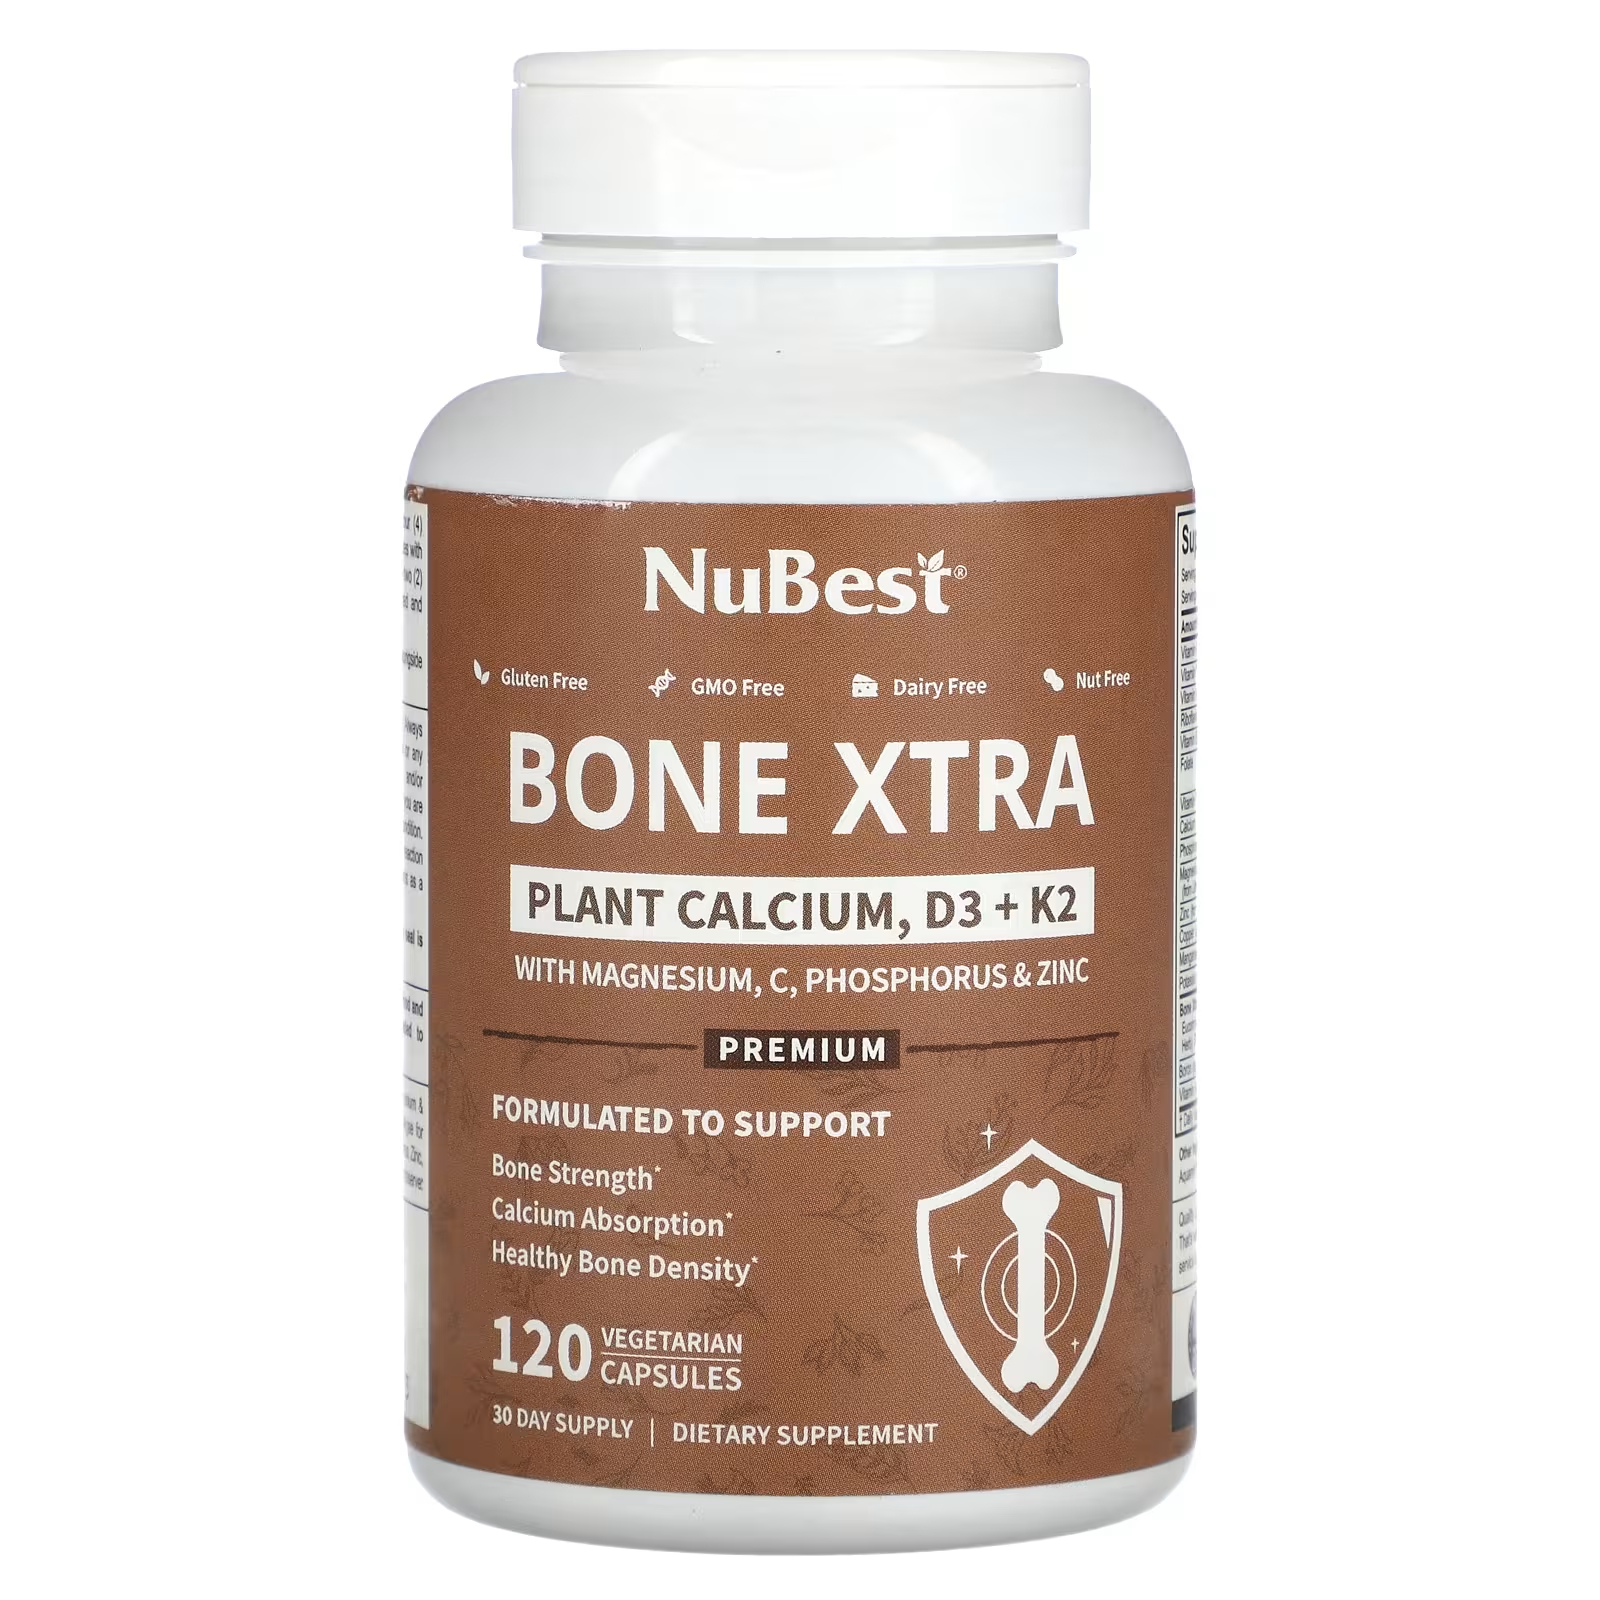 NuBest Bone Xtra Растительный кальций D3 + K2 120 капсул nubest bone xtra растительный кальций d3 k2 120 вегетарианских капсул